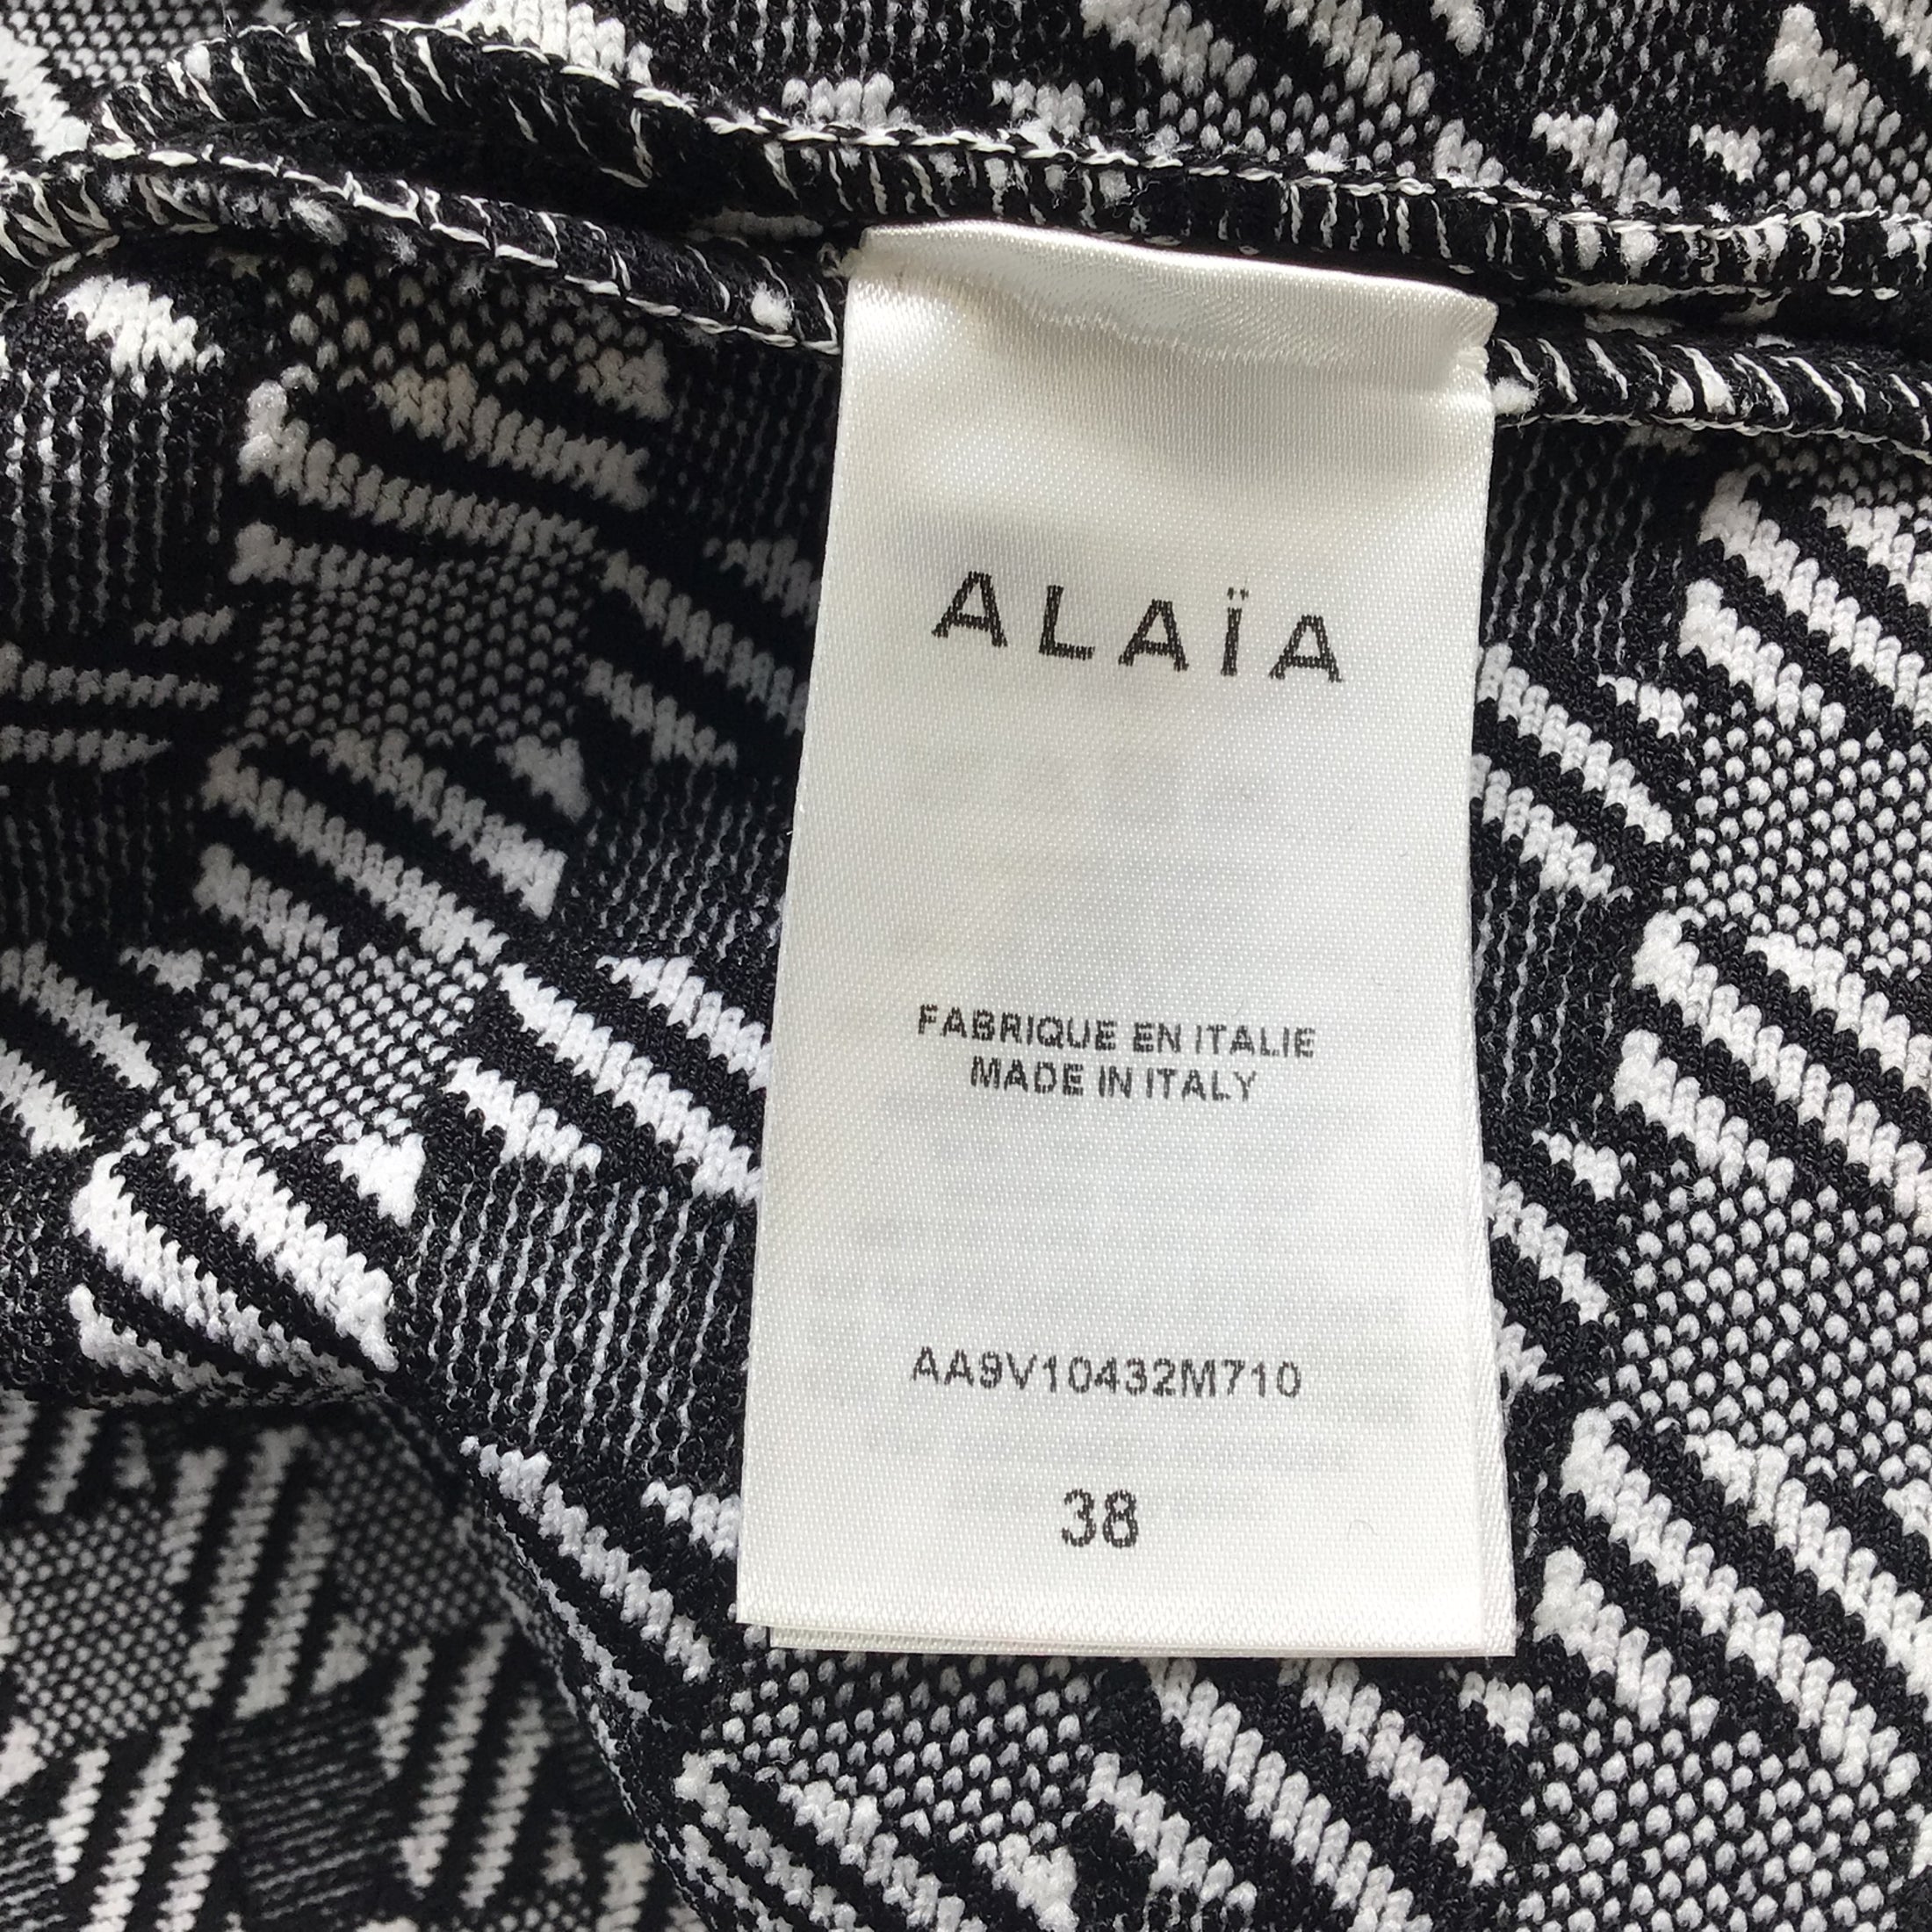 Alaia Black / White Check Knit Cardigan Sweater